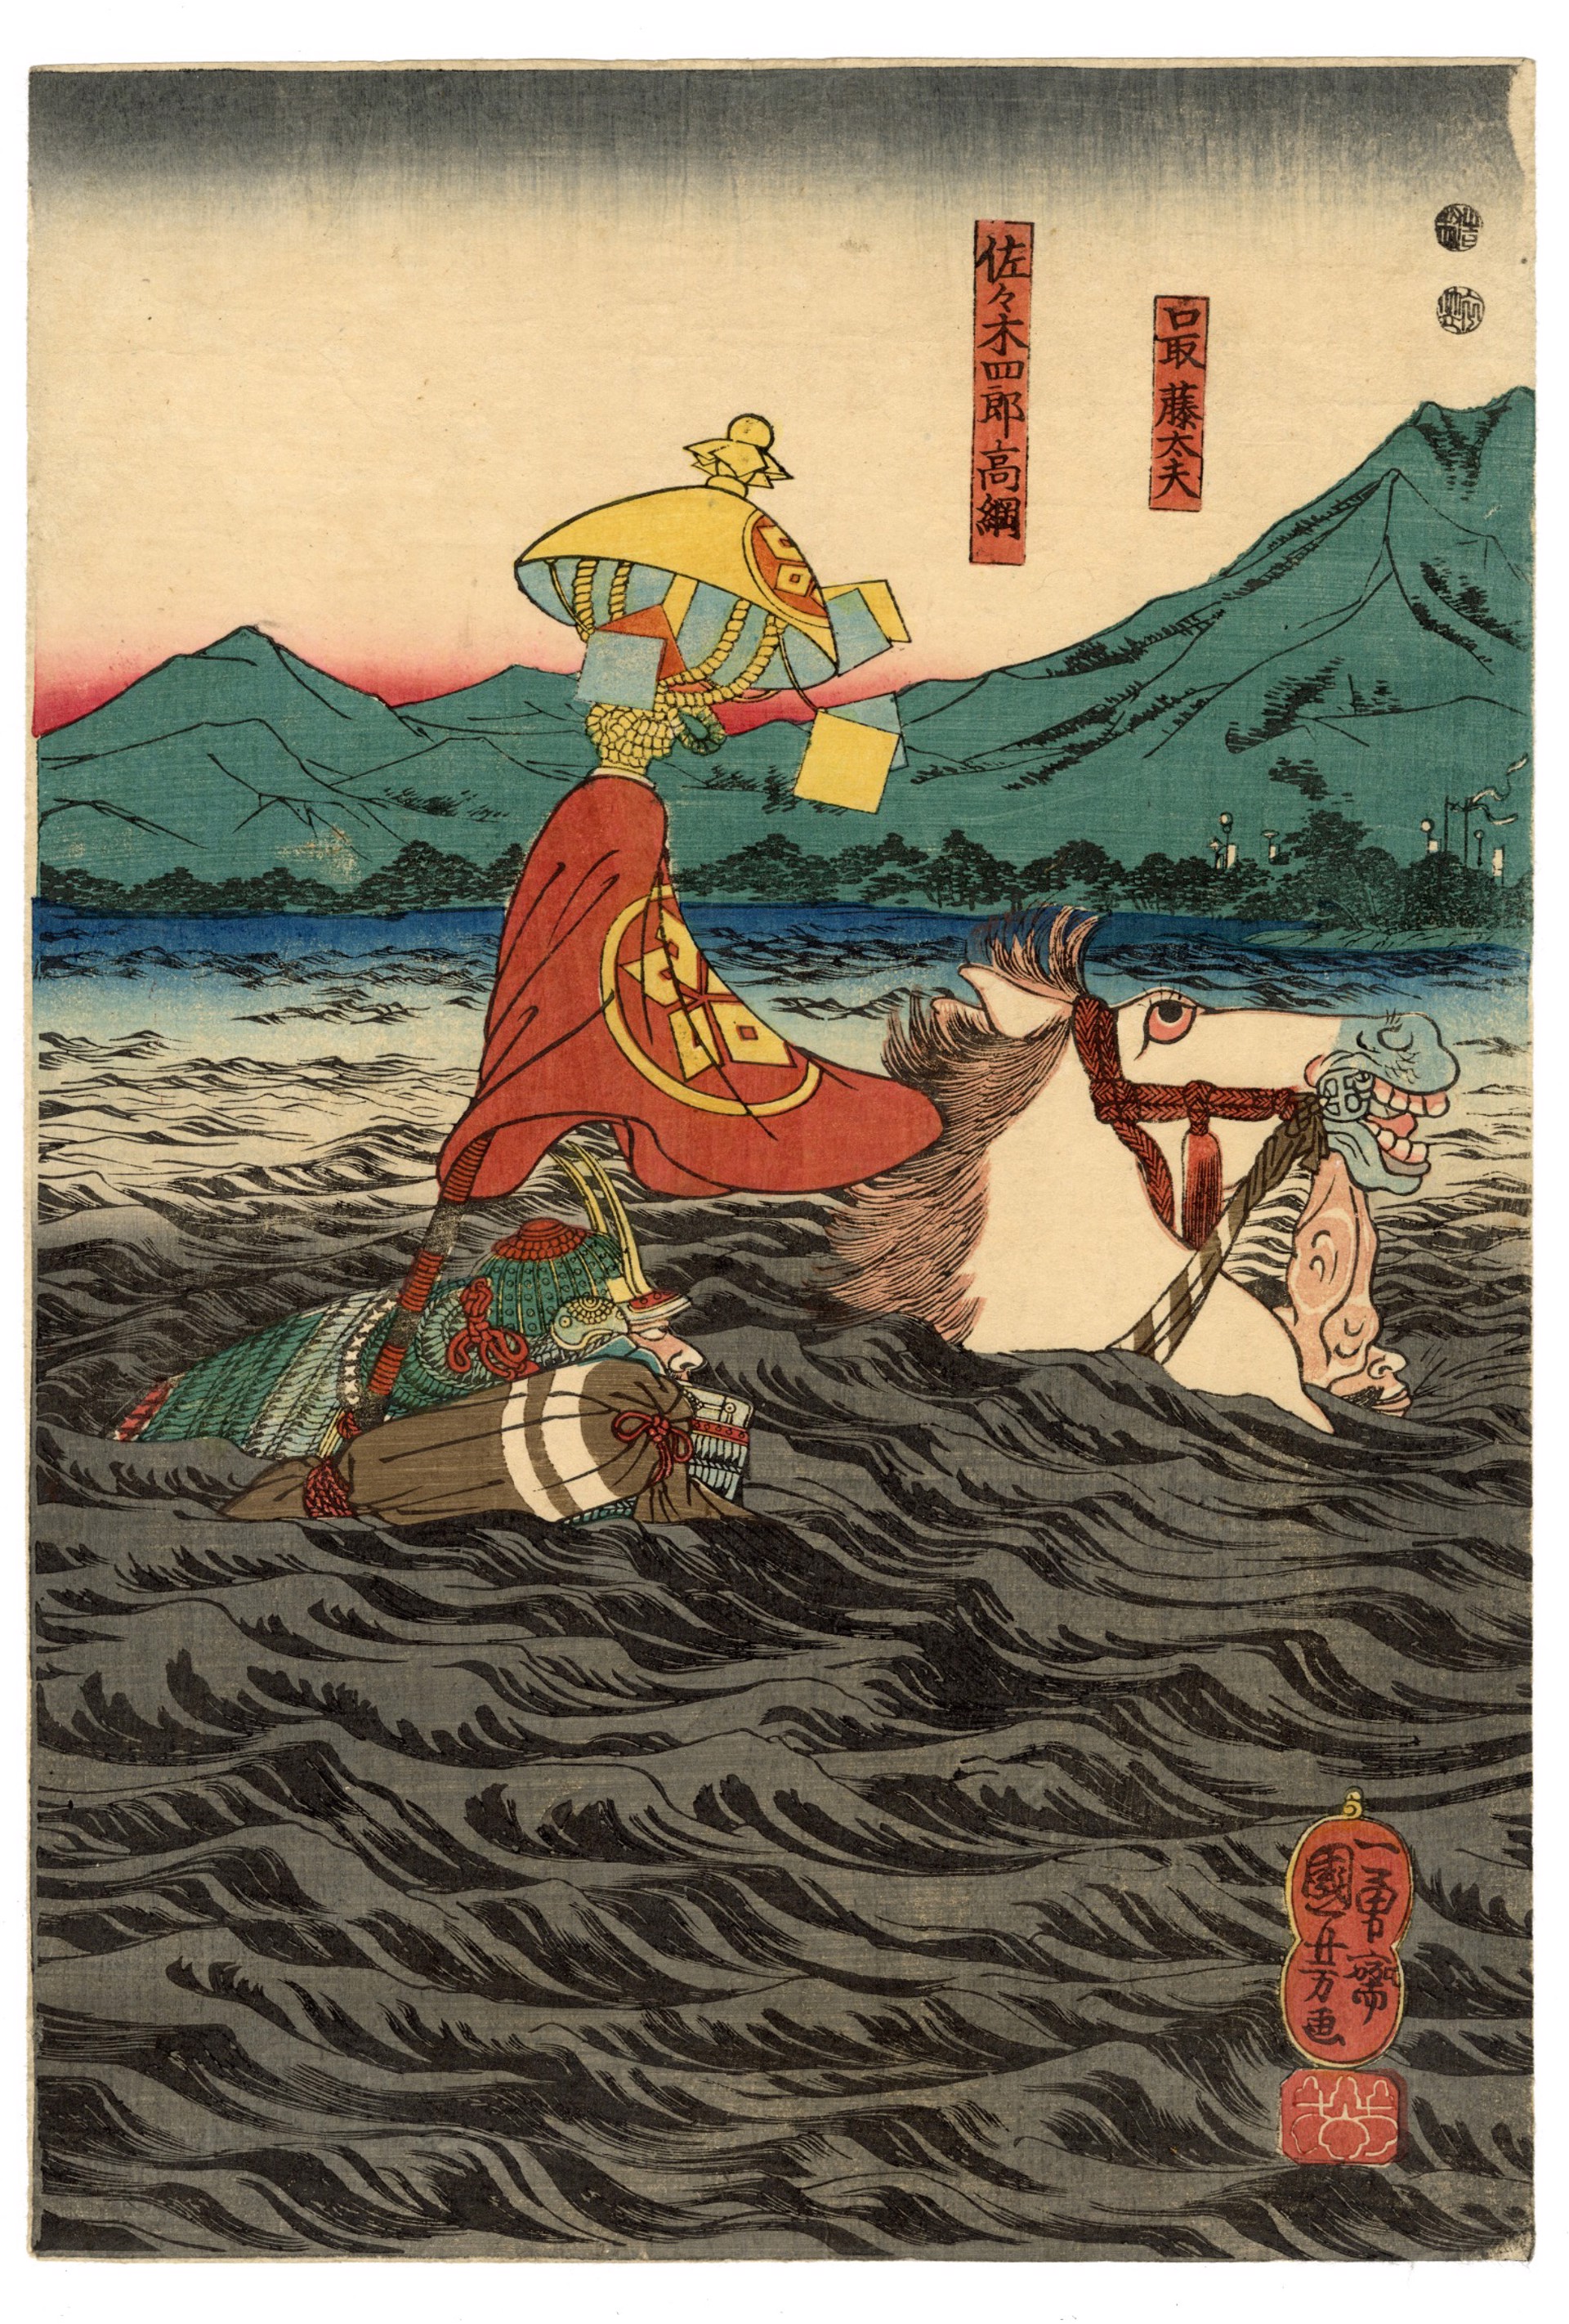 The Battle of Uji River (1182) by Kuniyoshi